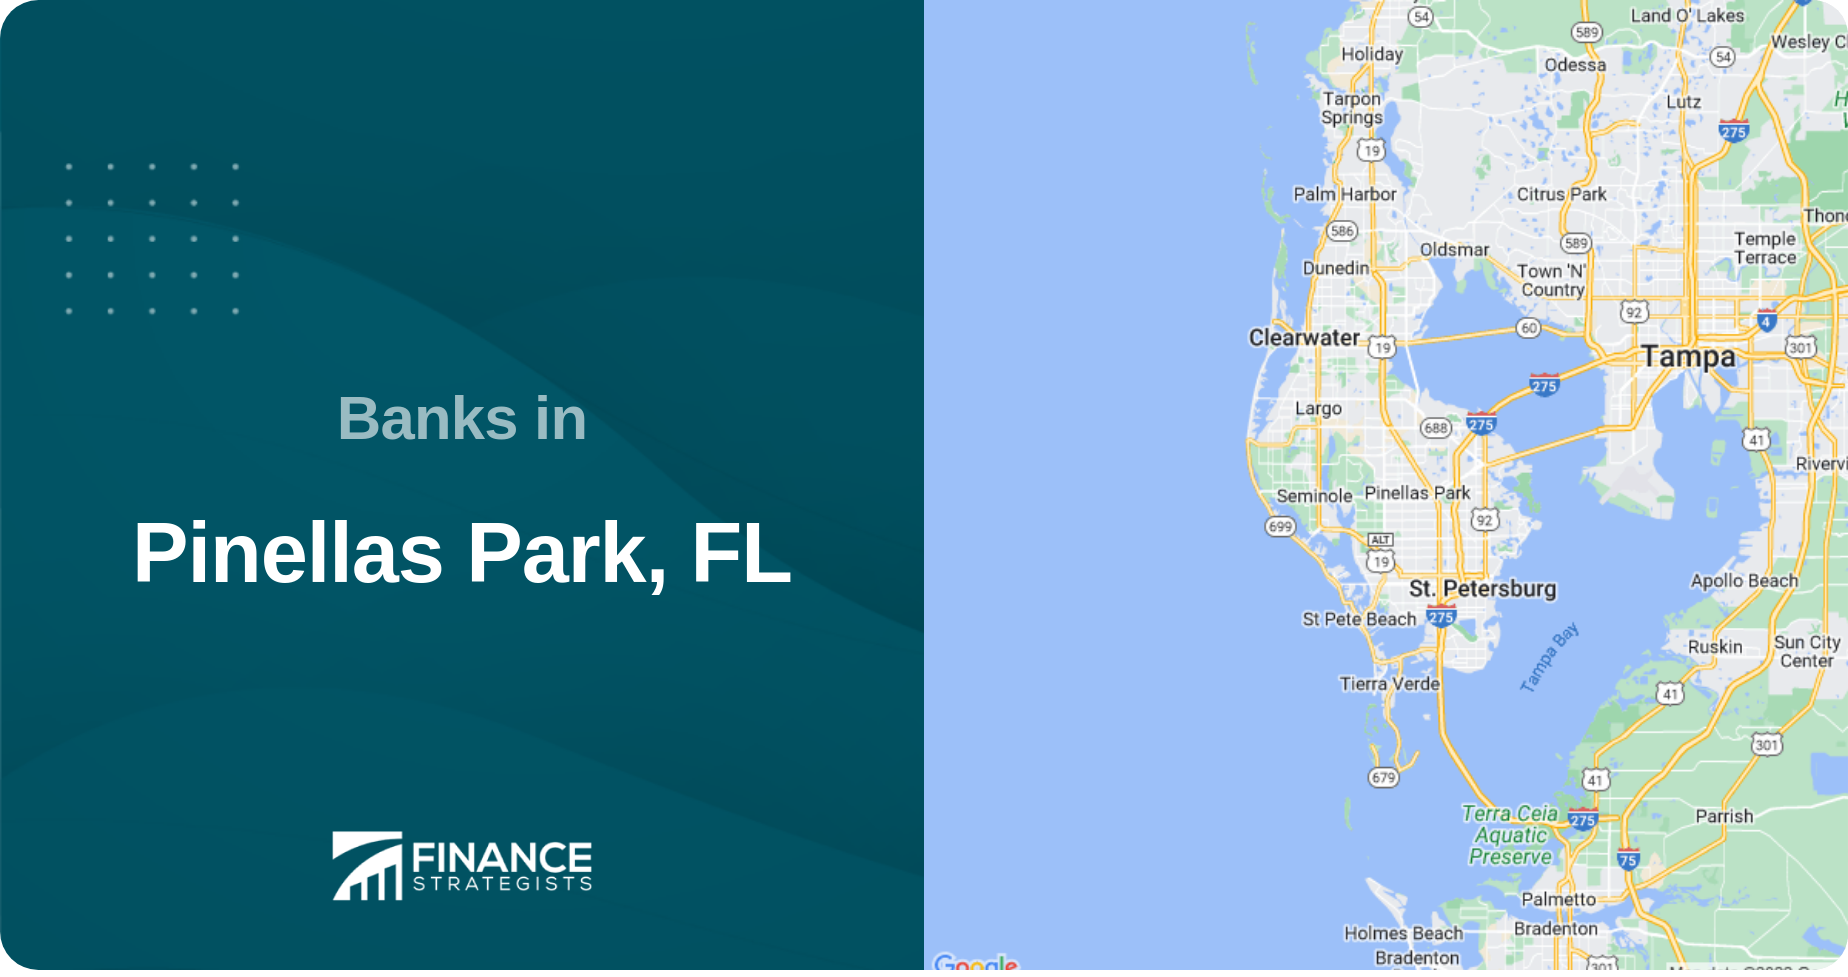 Banks in Pinellas Park, FL